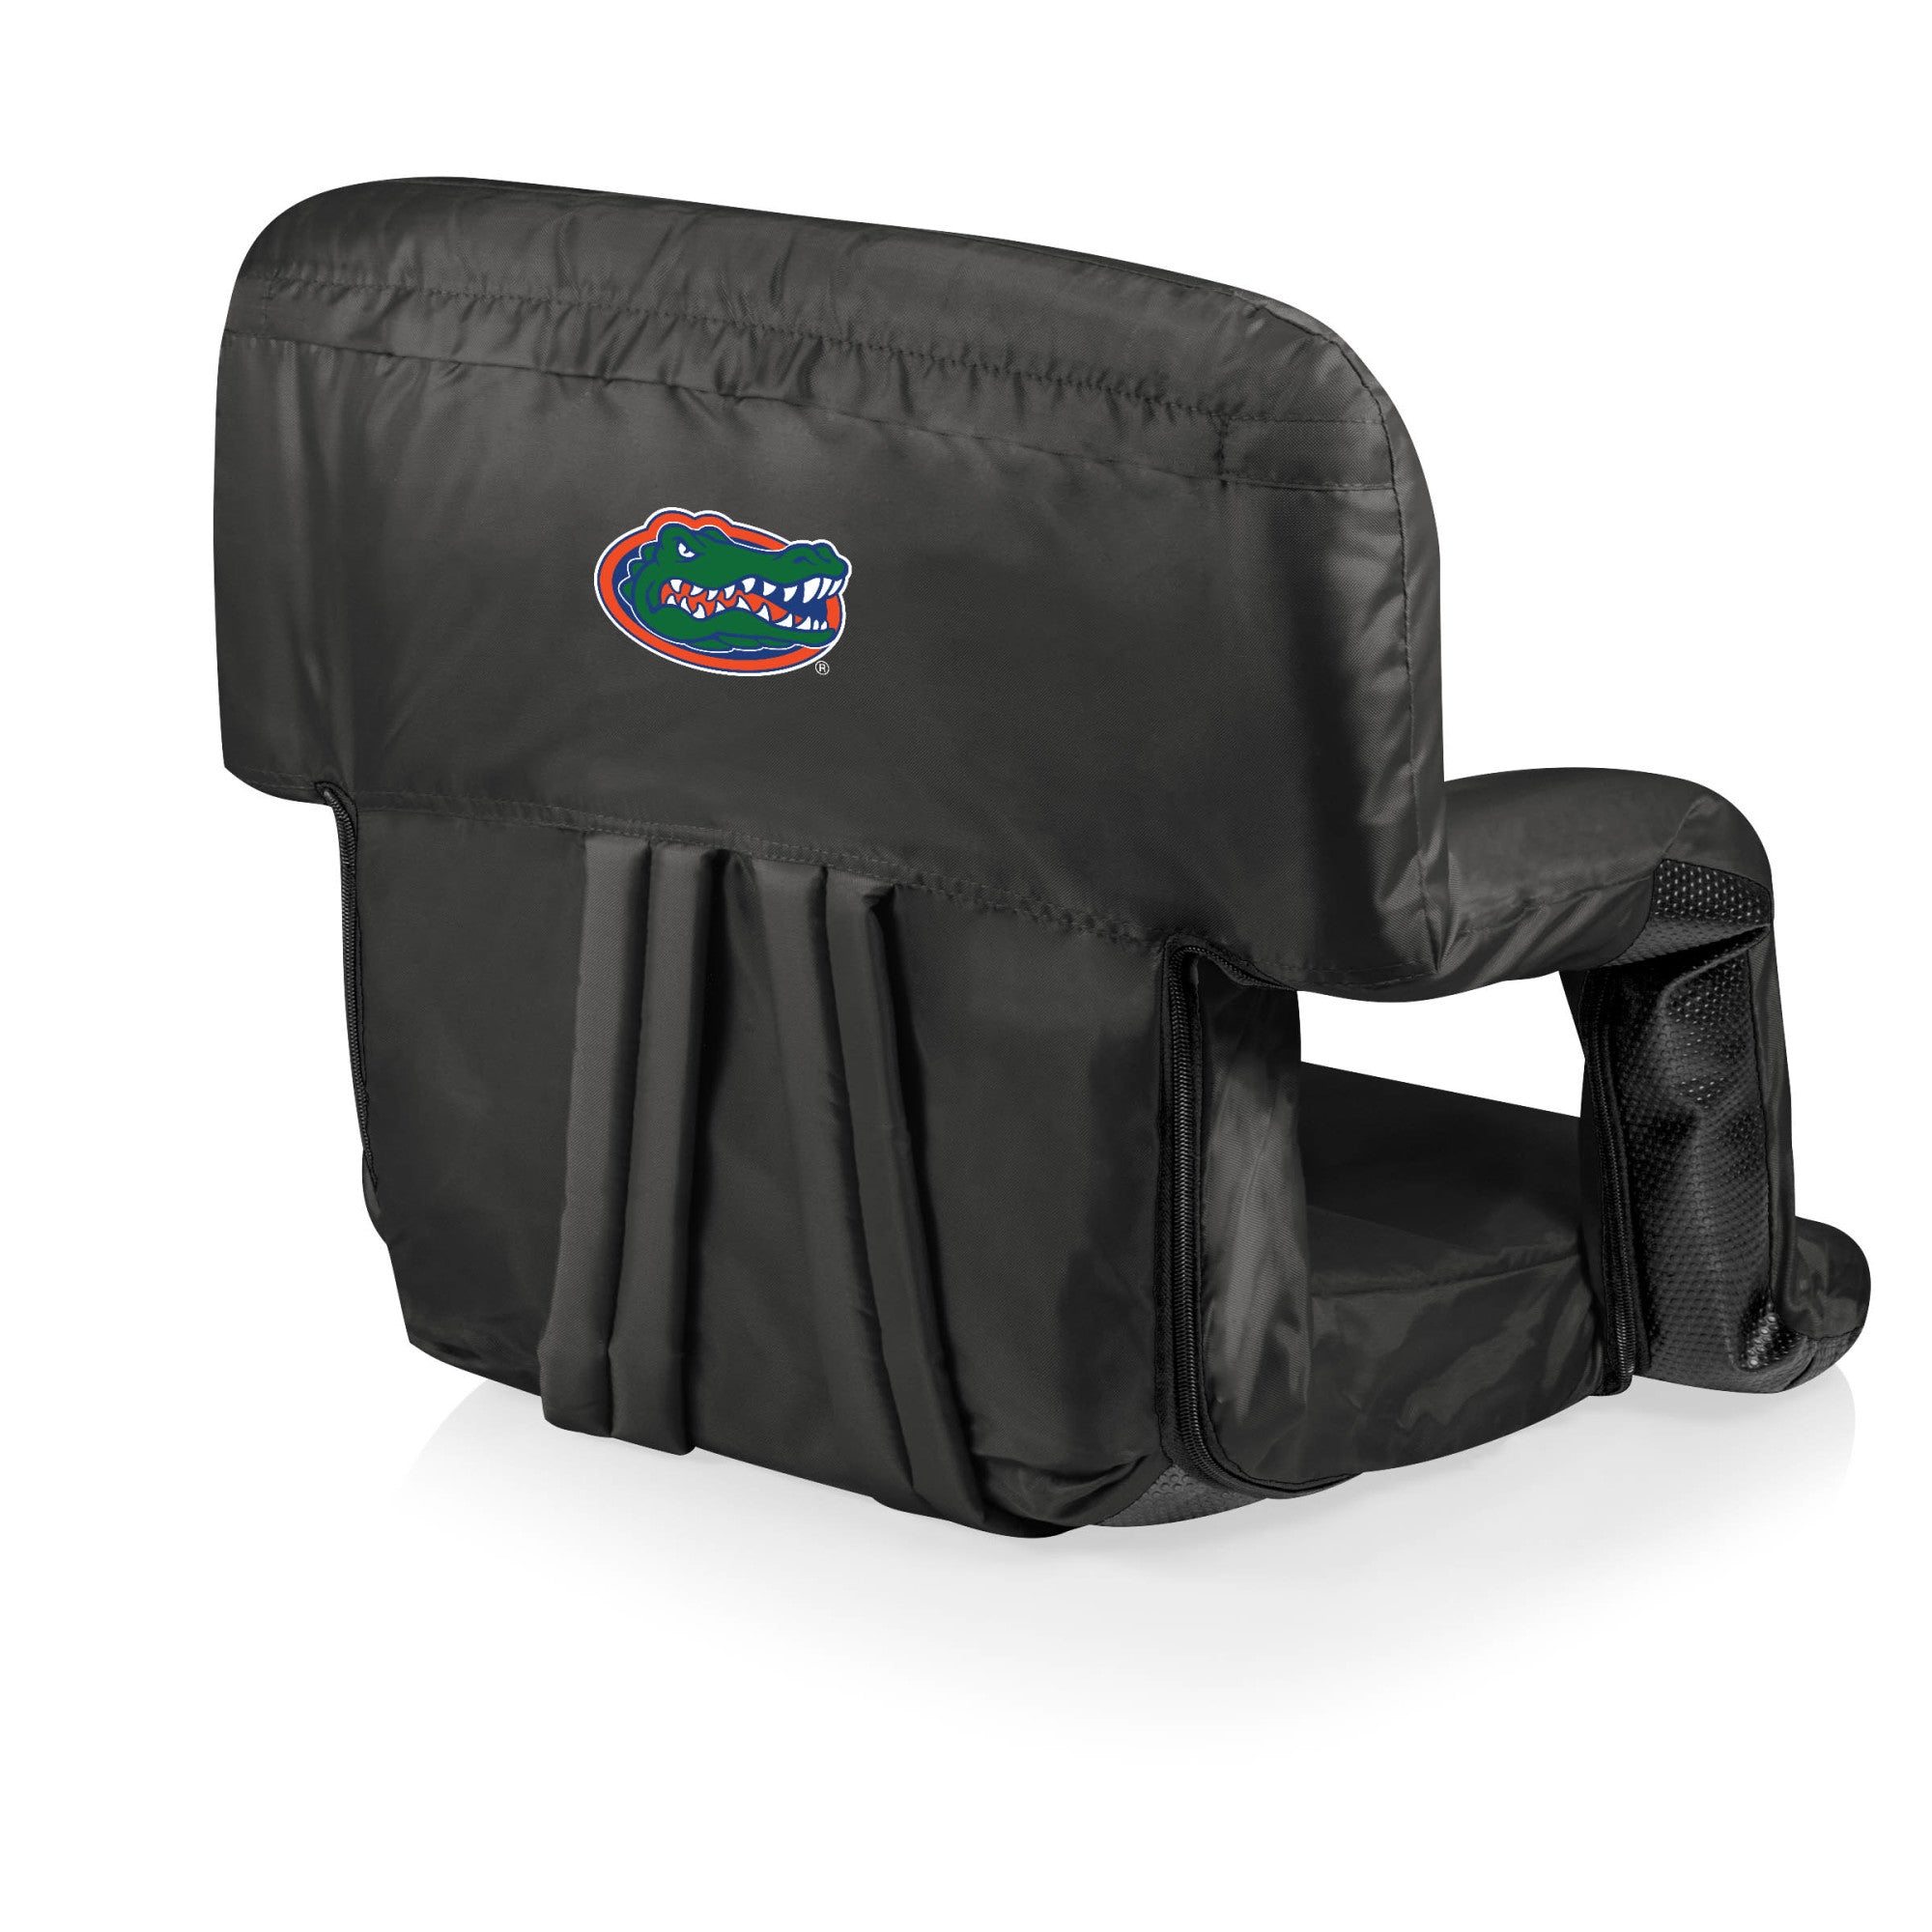 Barstool Sports Bleacher Cushion - Venture Products LLC